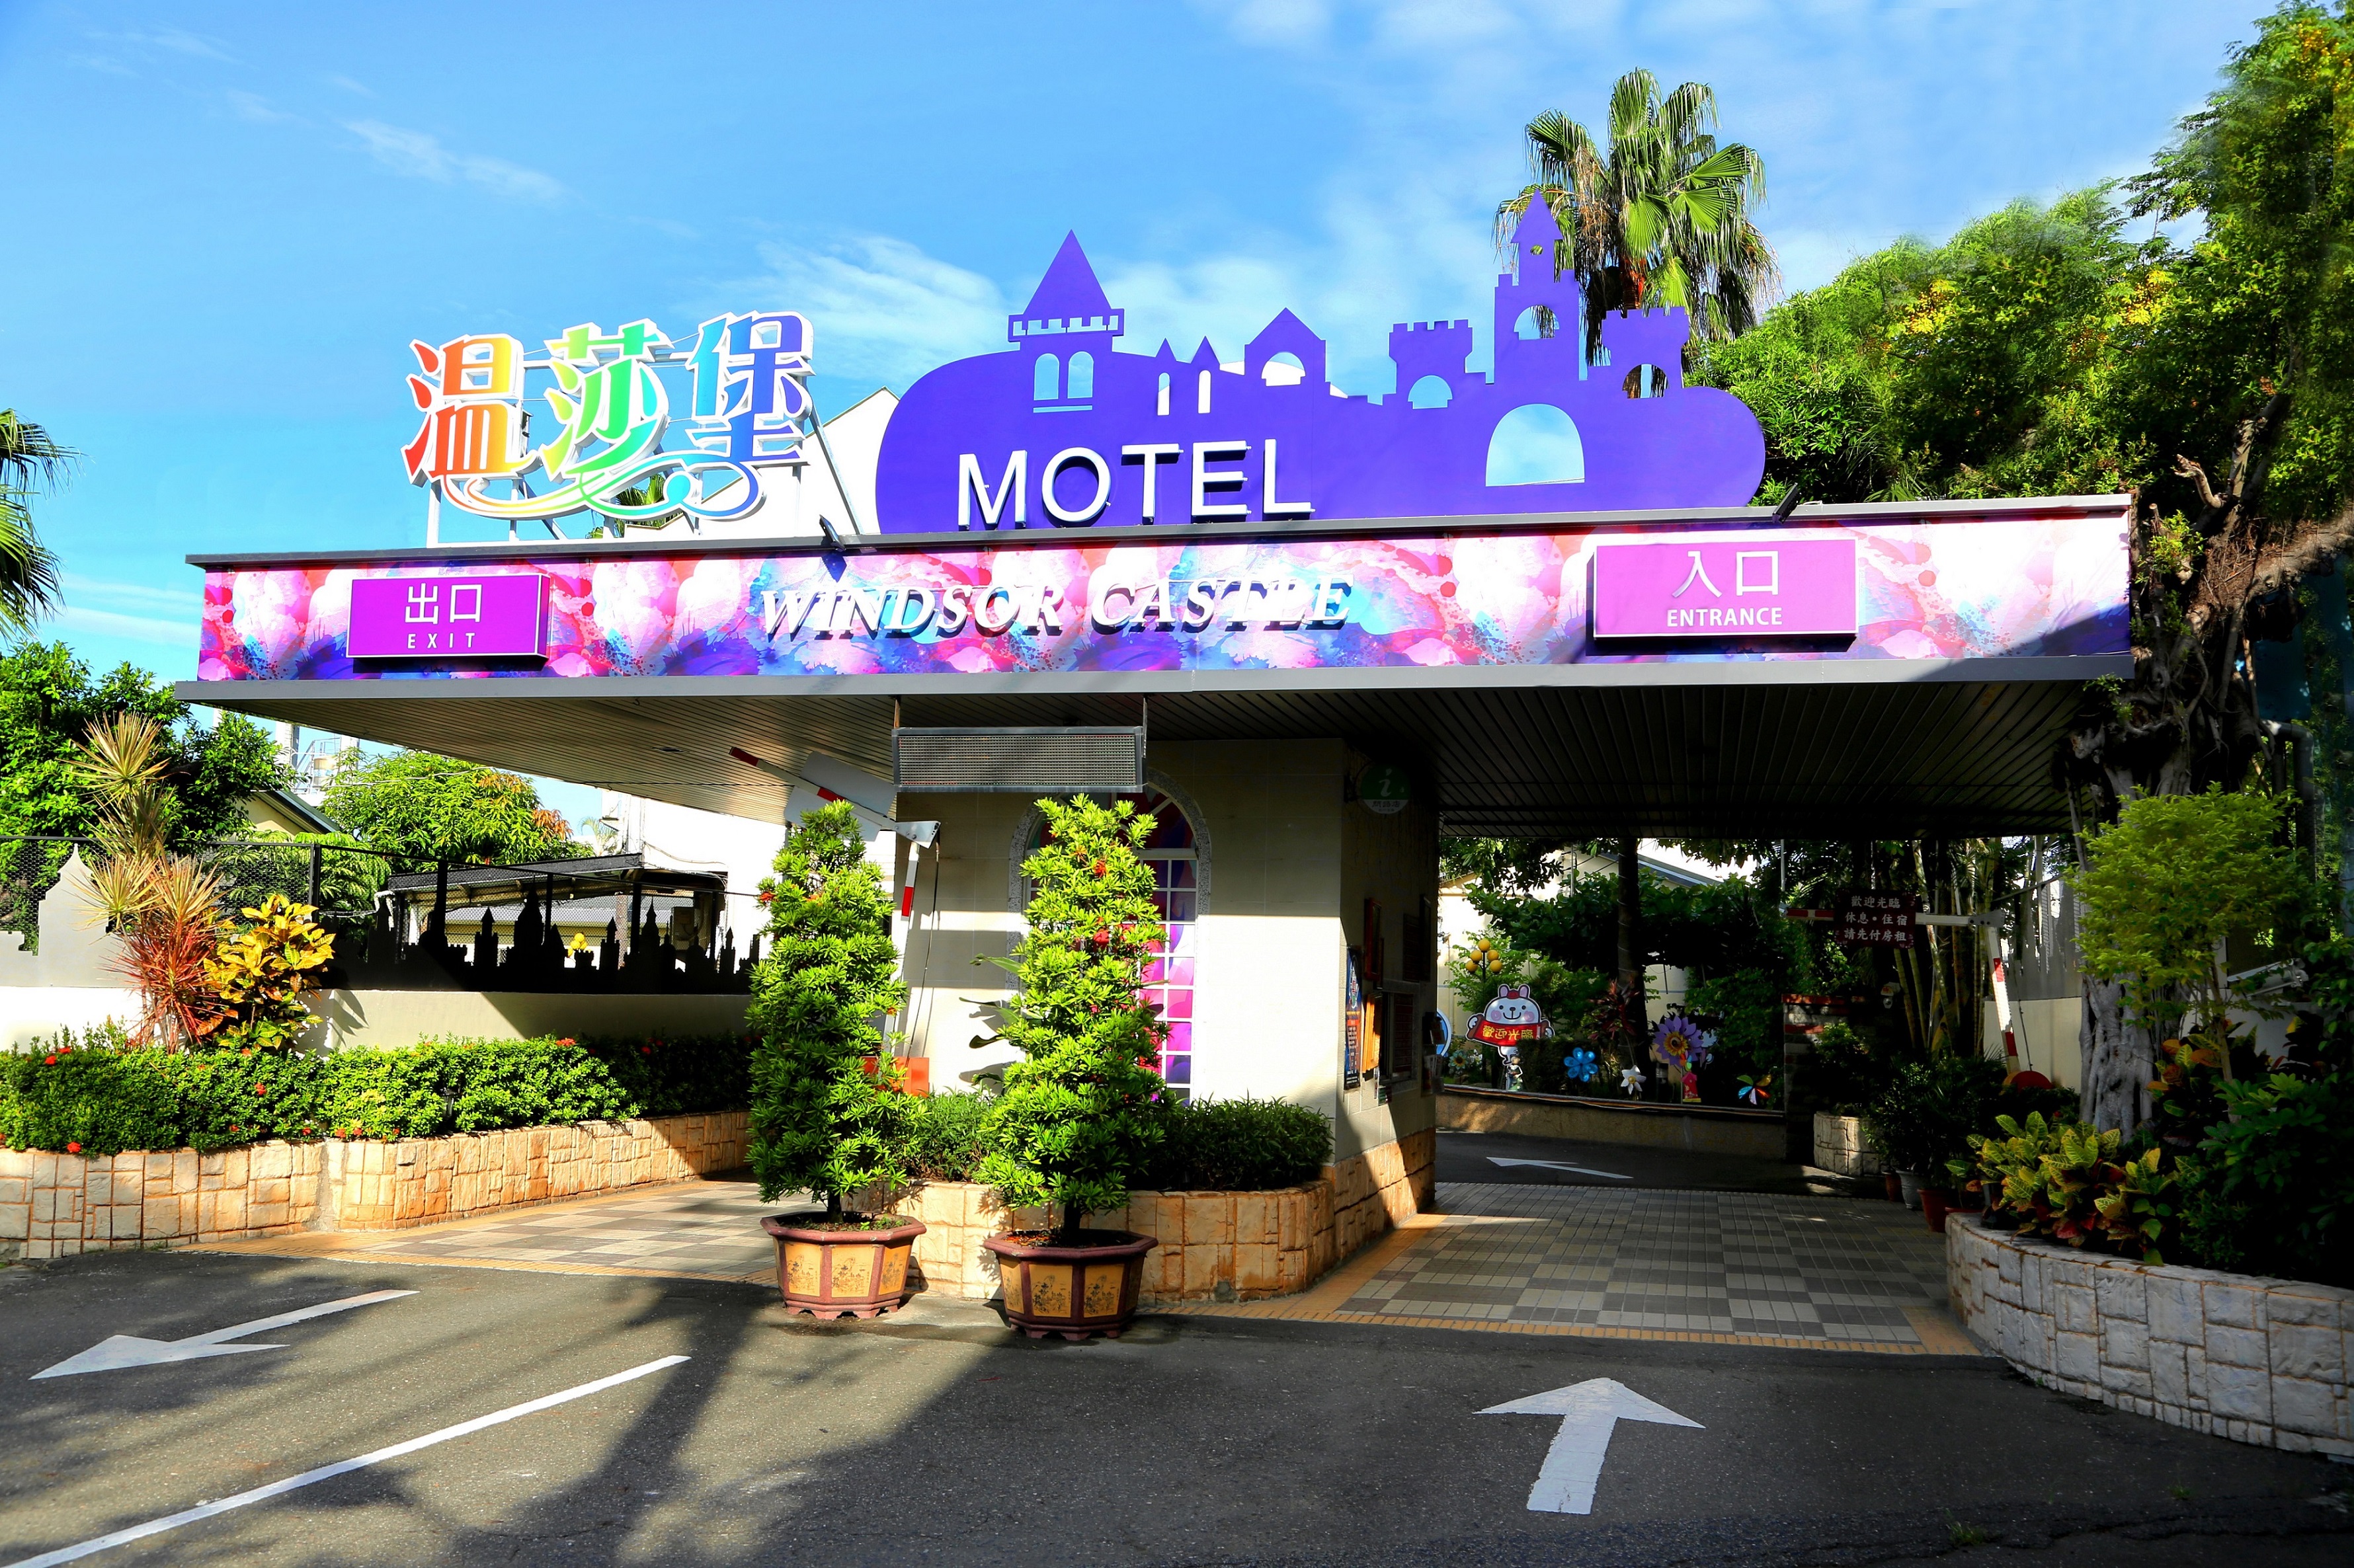 Wen Sha Bao Motel